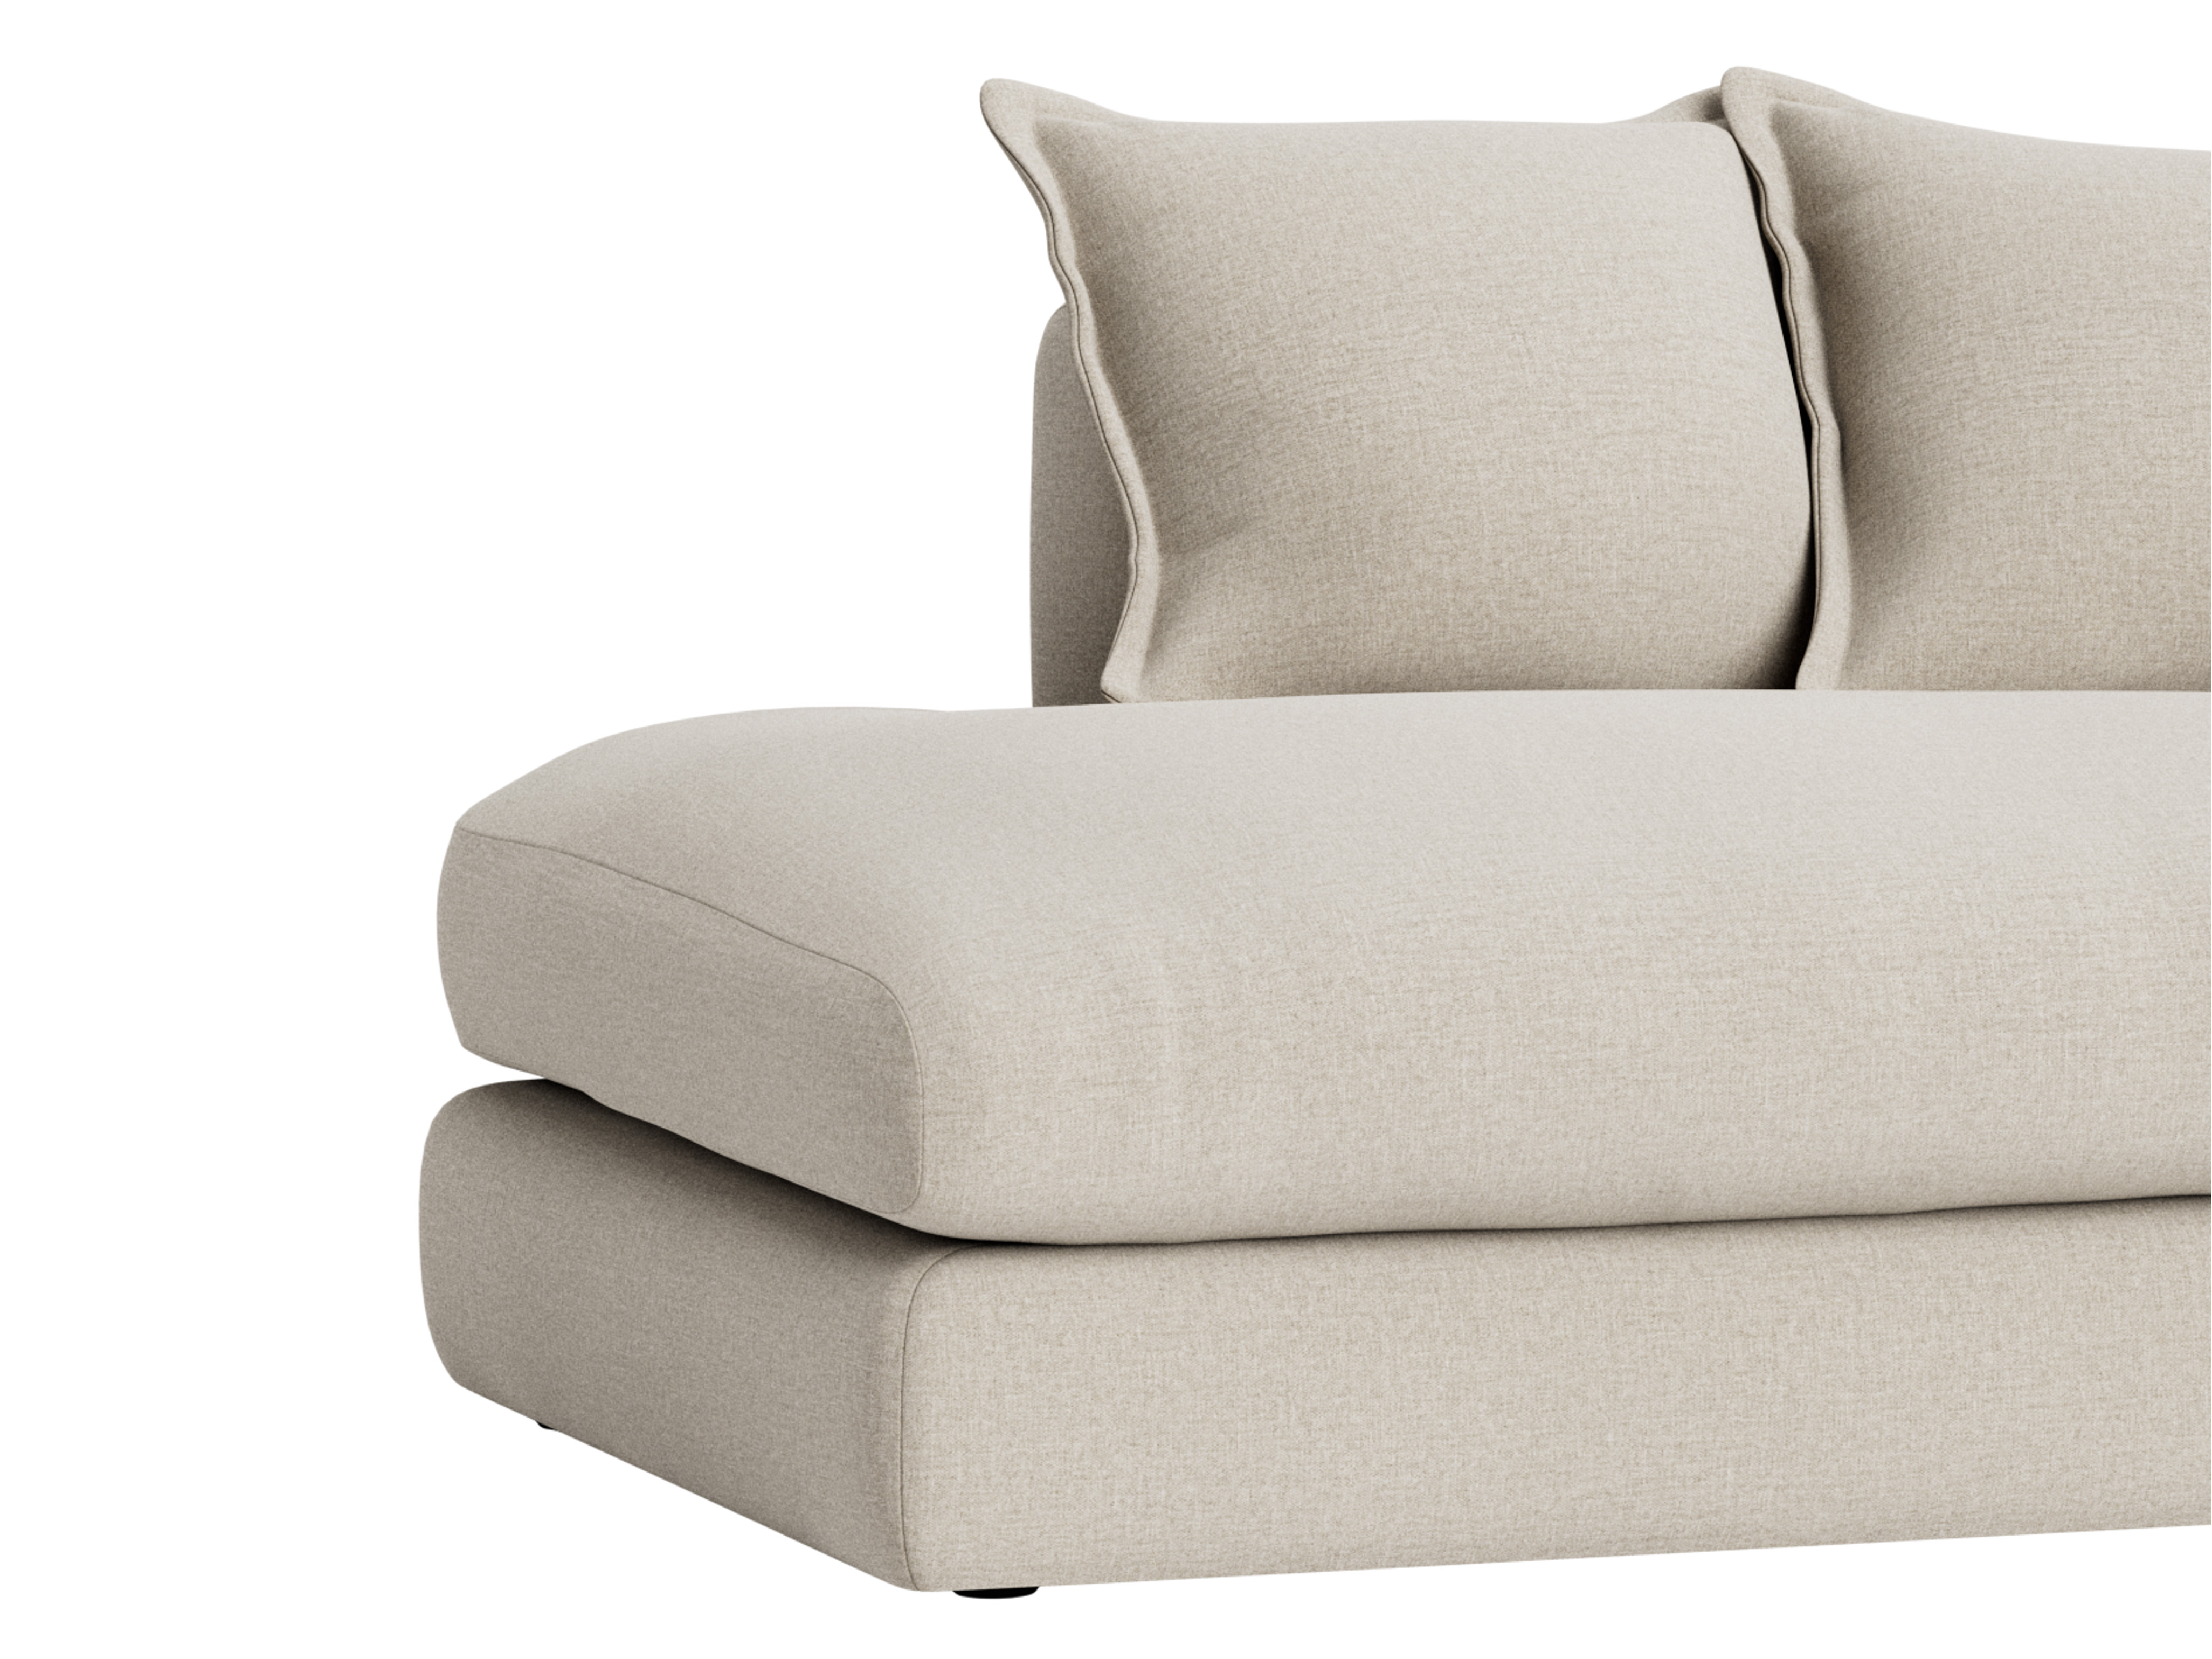 Wodge Modular Chaise Sofa Comfy L Shaped Loaf